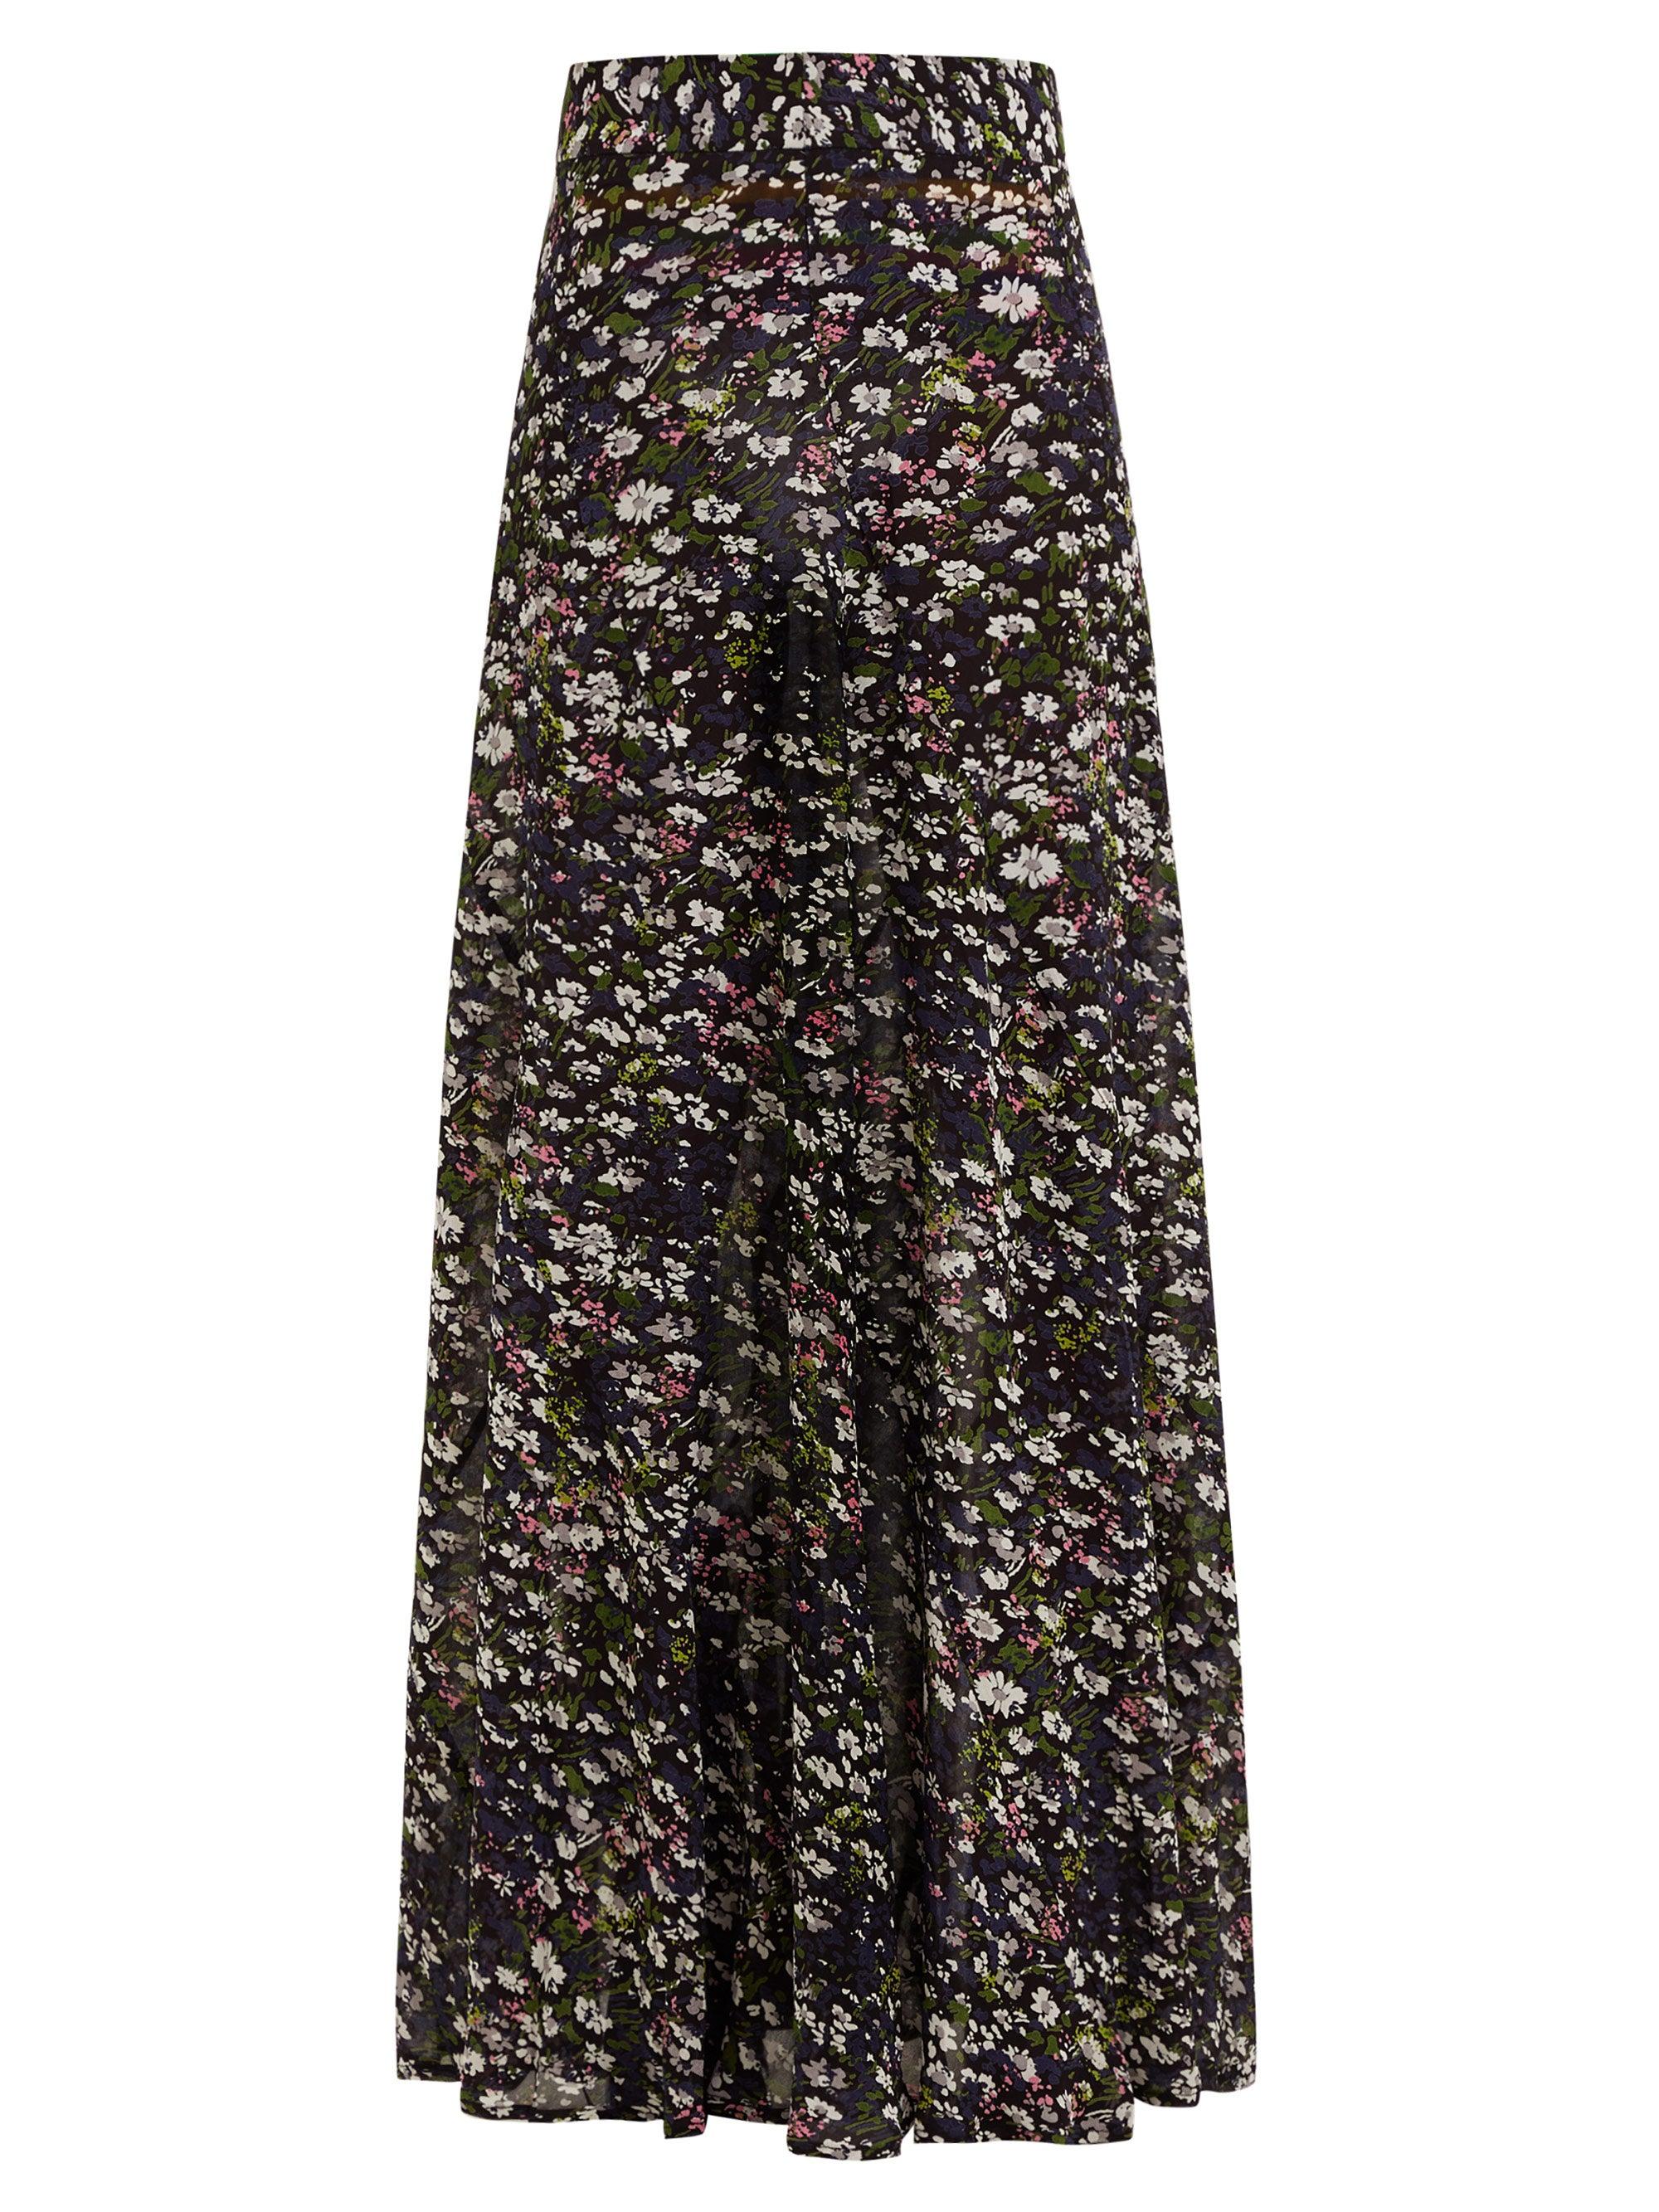 Ganni Floral-print Georgette Maxi Skirt in Black - Lyst